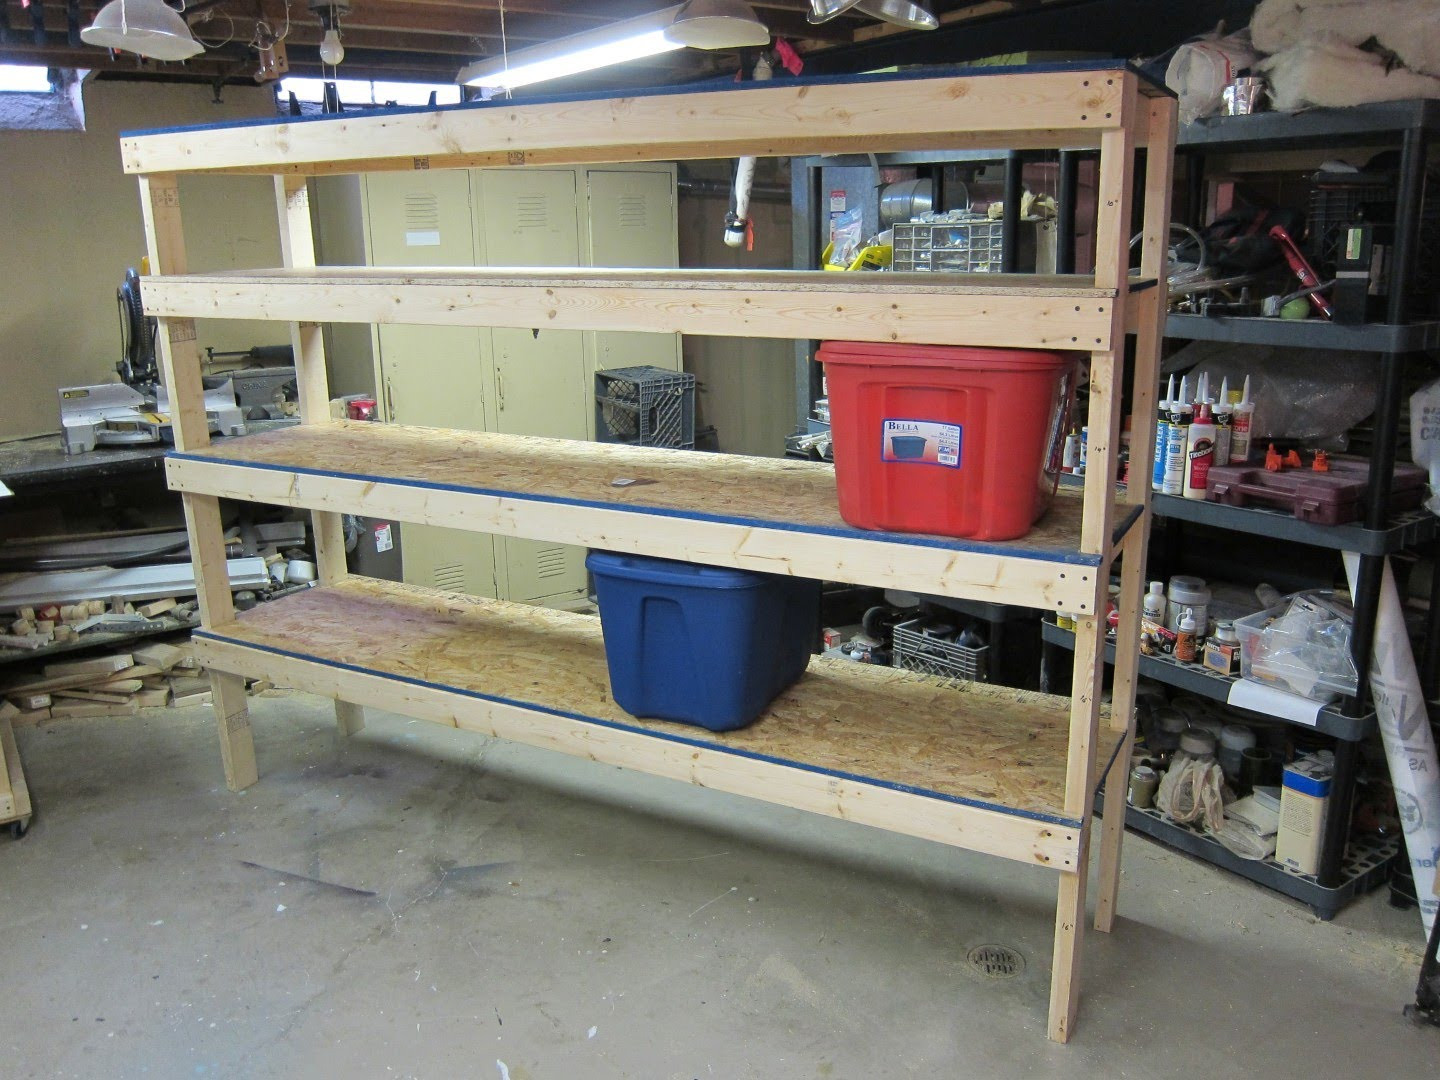 Best ideas about Garage Storage Shelves
. Save or Pin 20 DIY Garage Shelving Ideas Now.